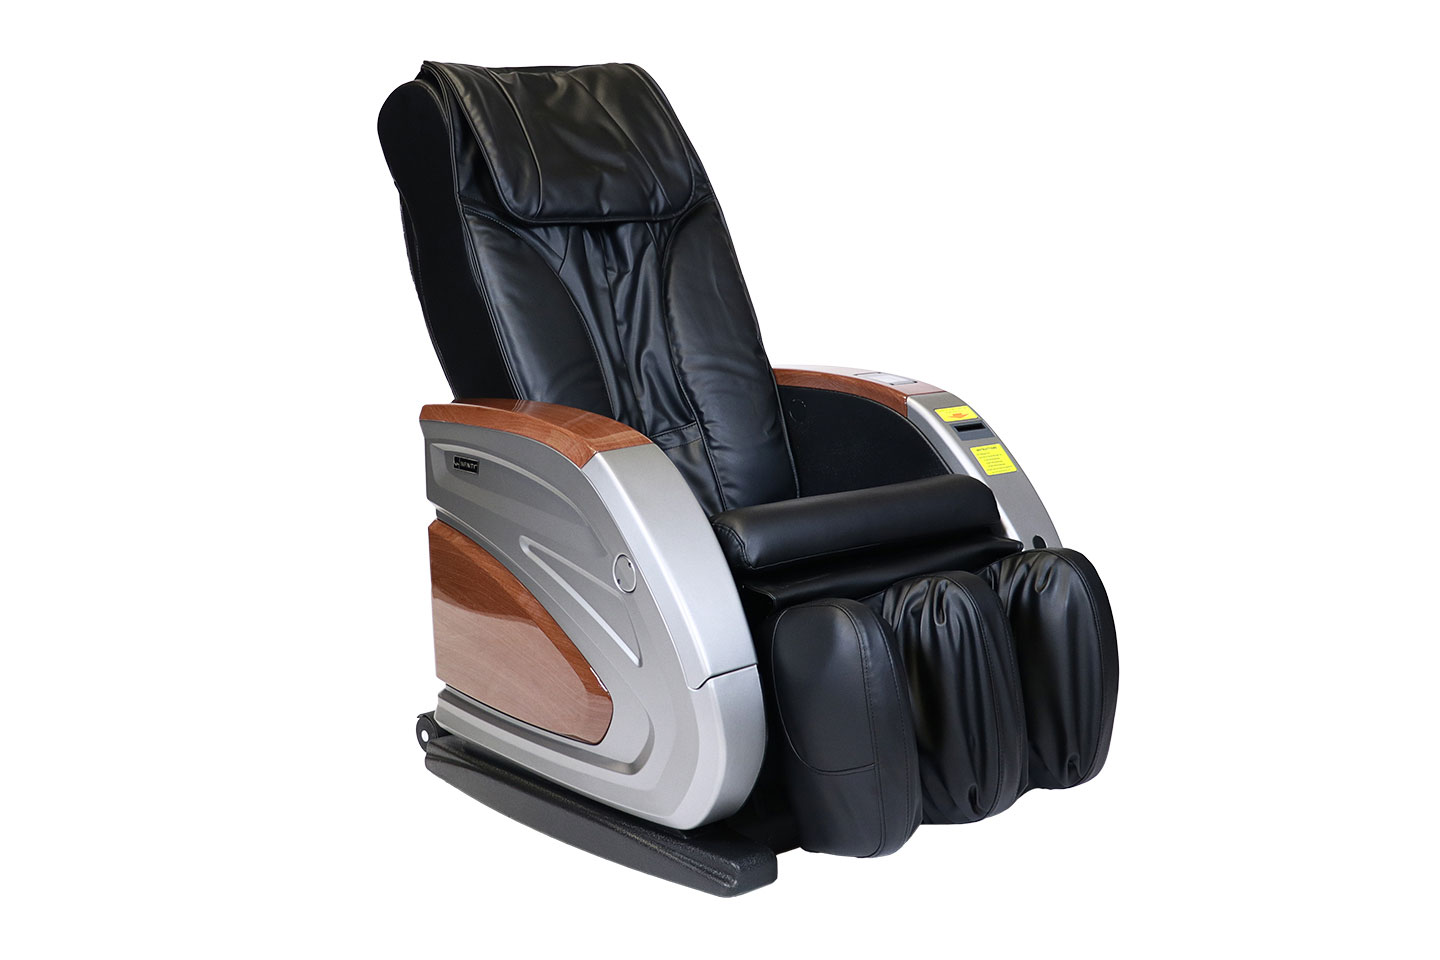 Share Chair Vending Massage Chair